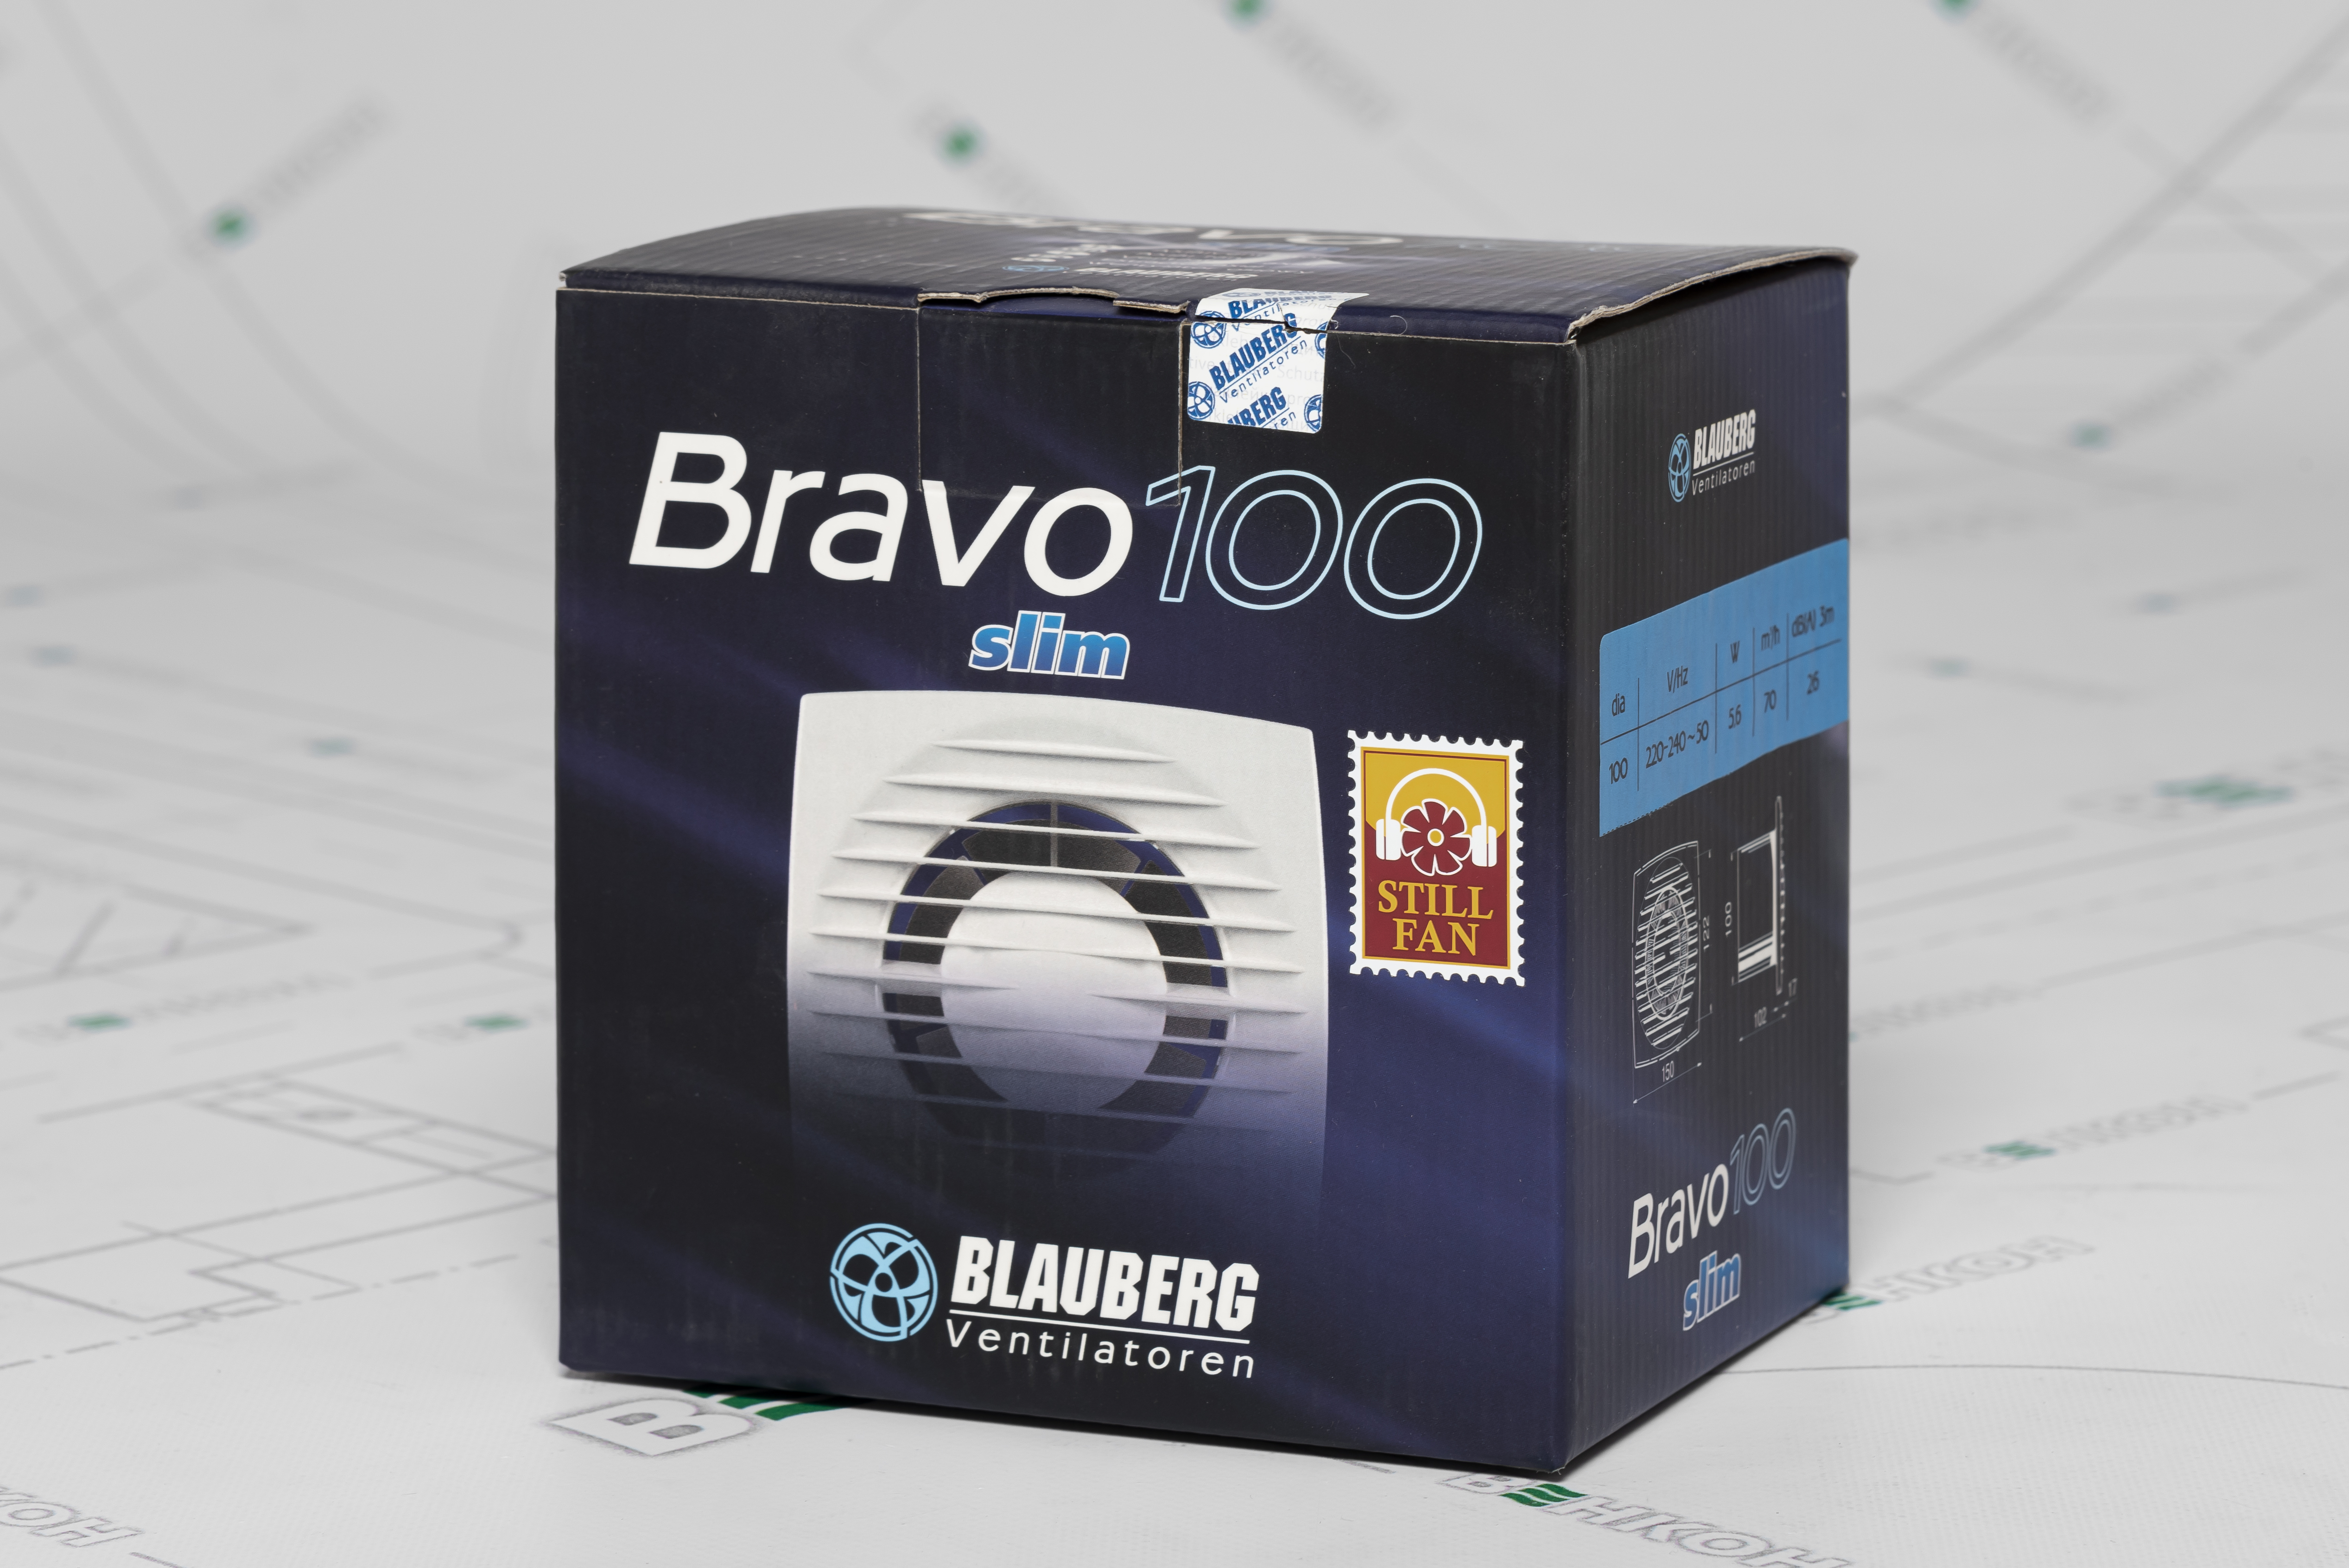 Вытяжной вентилятор Blauberg Bravo Still 100 обзор - фото 11